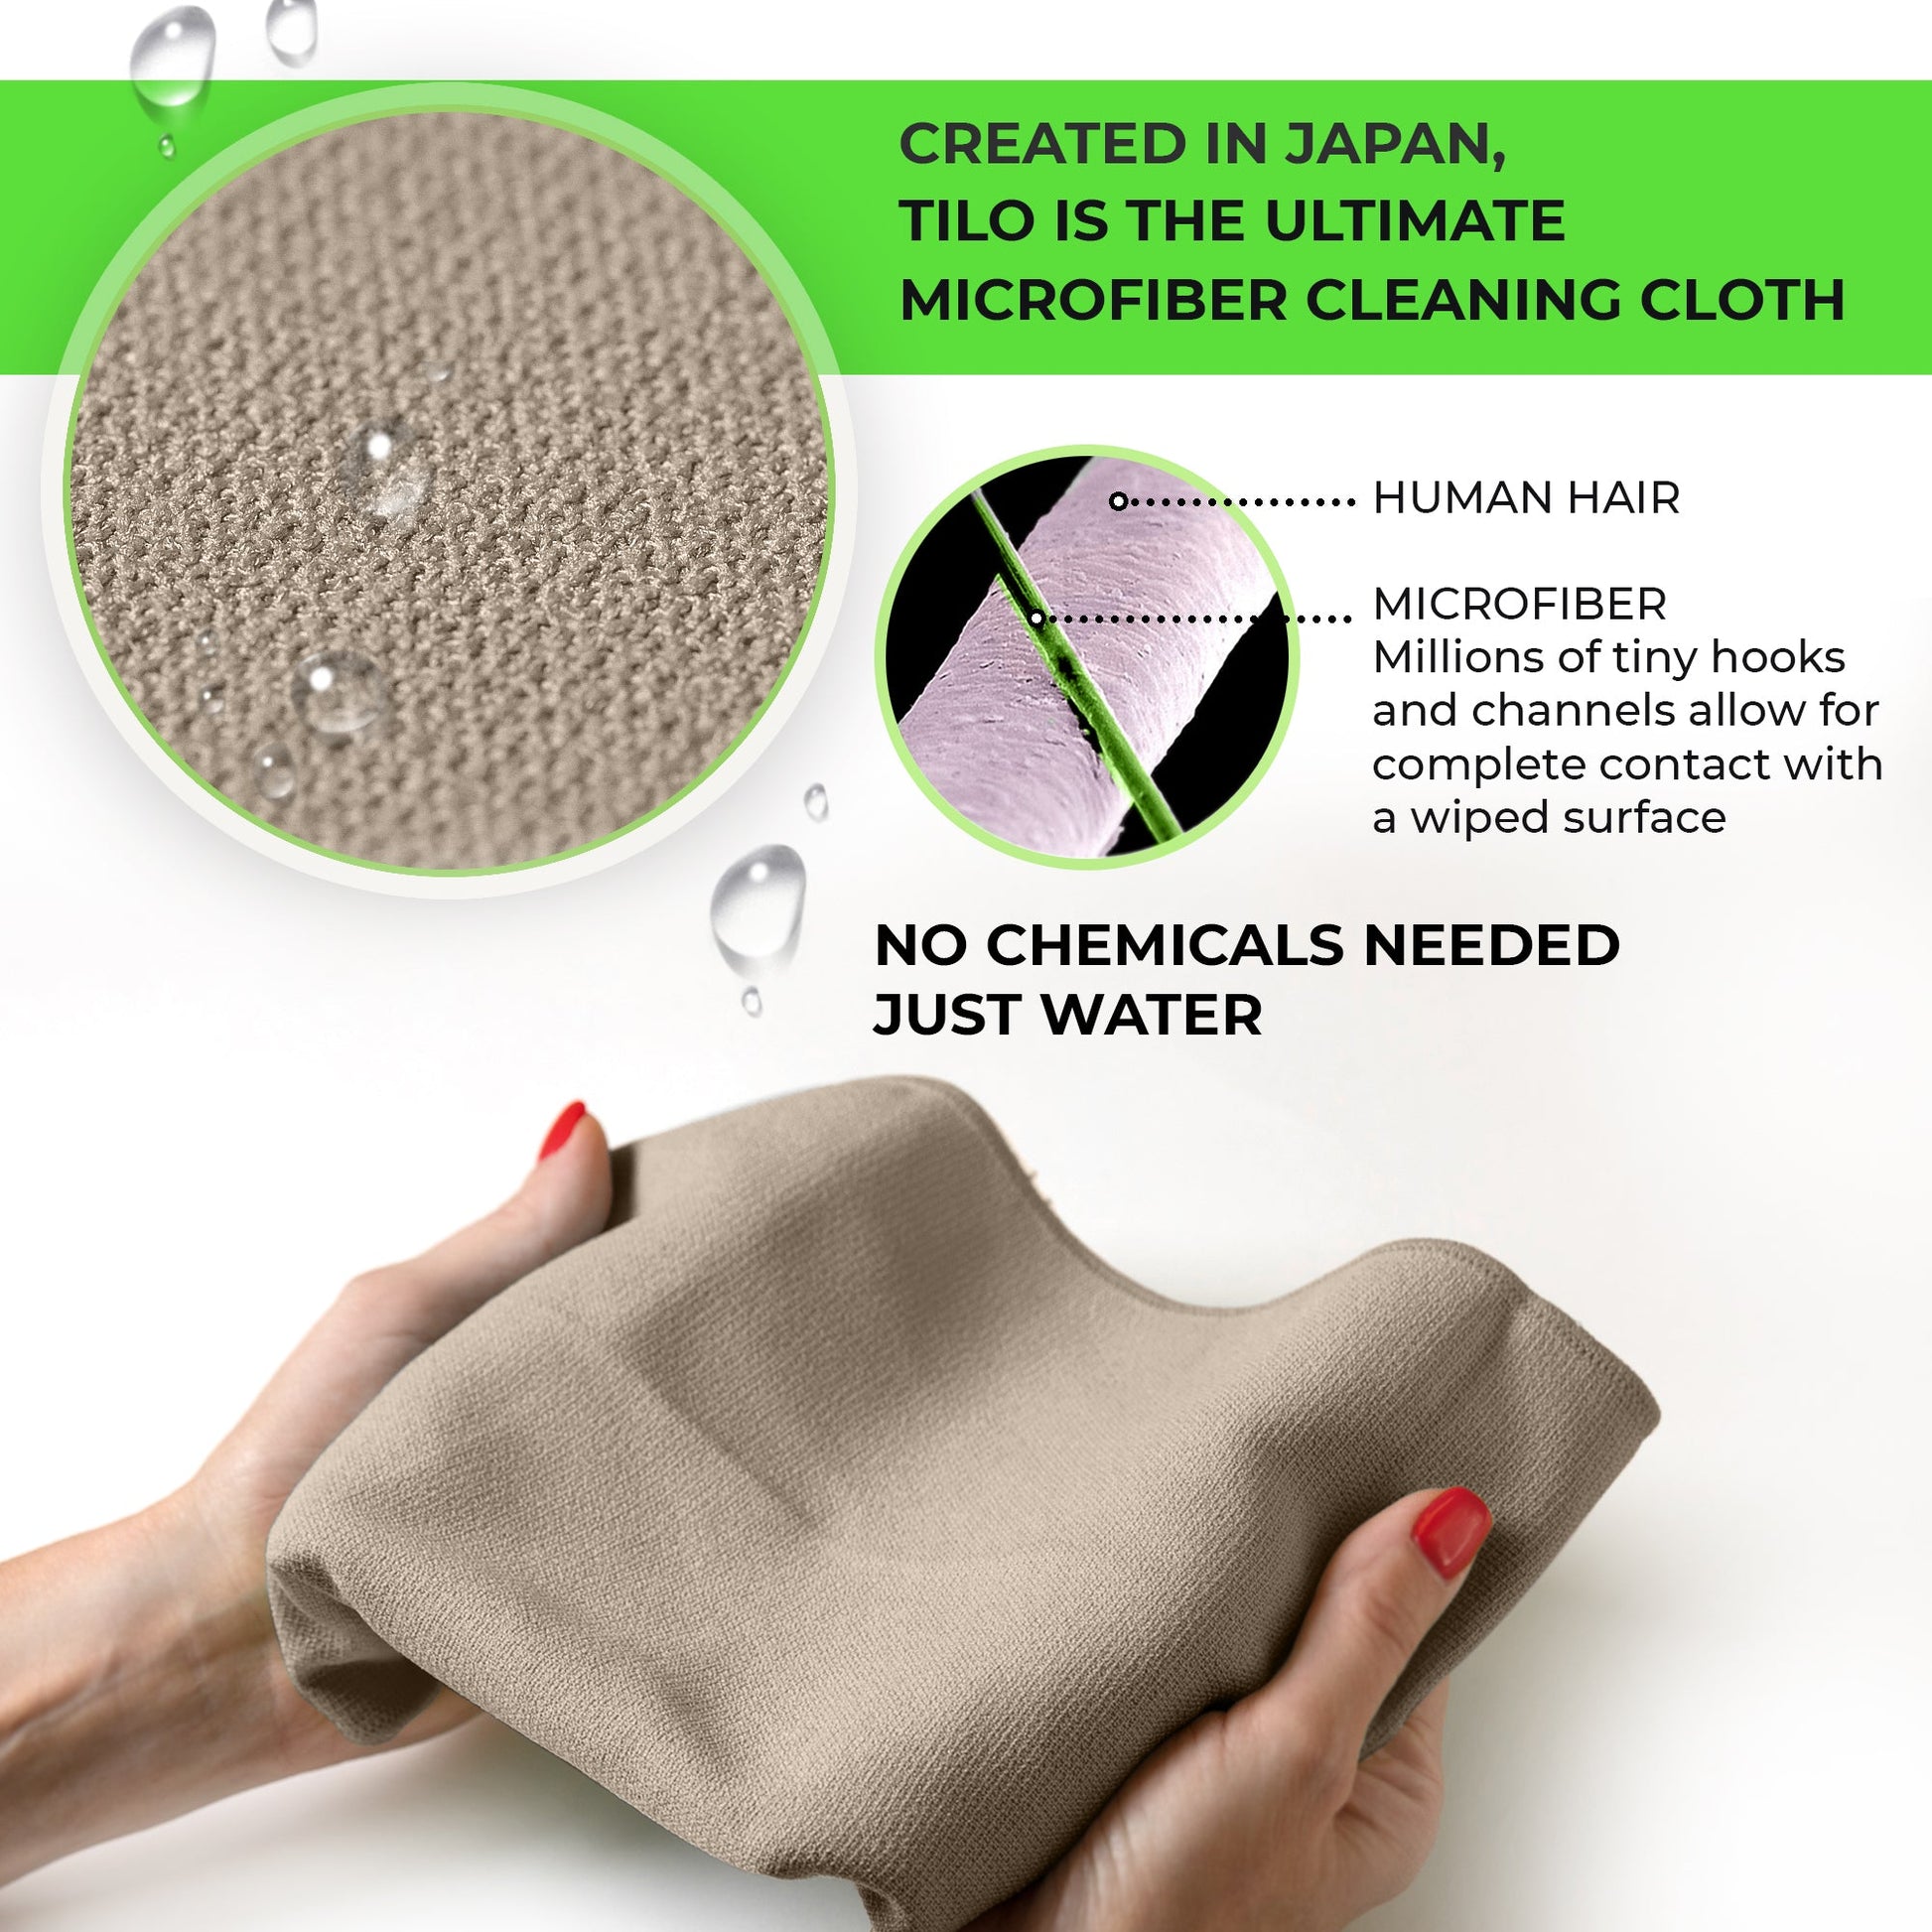 TiLO Microfiber Cleaning Cloth – 19.75 x 13-inch Reusable – Beige - TiLO The Ultimate